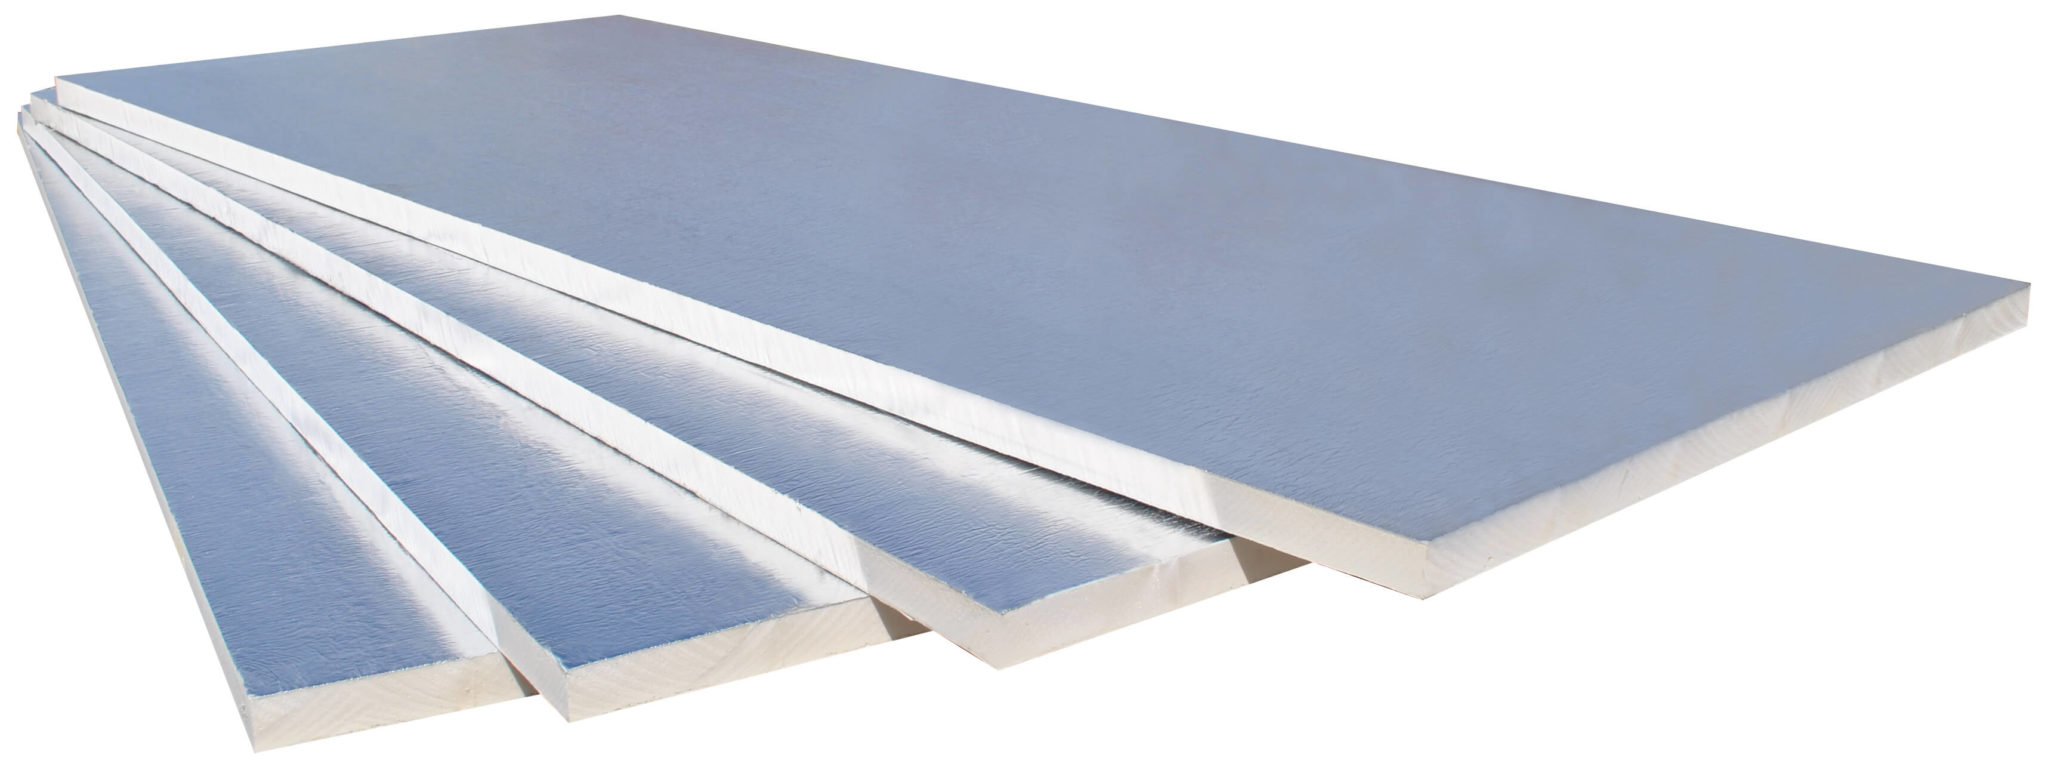 2 inch foam board insulation under mattress topper